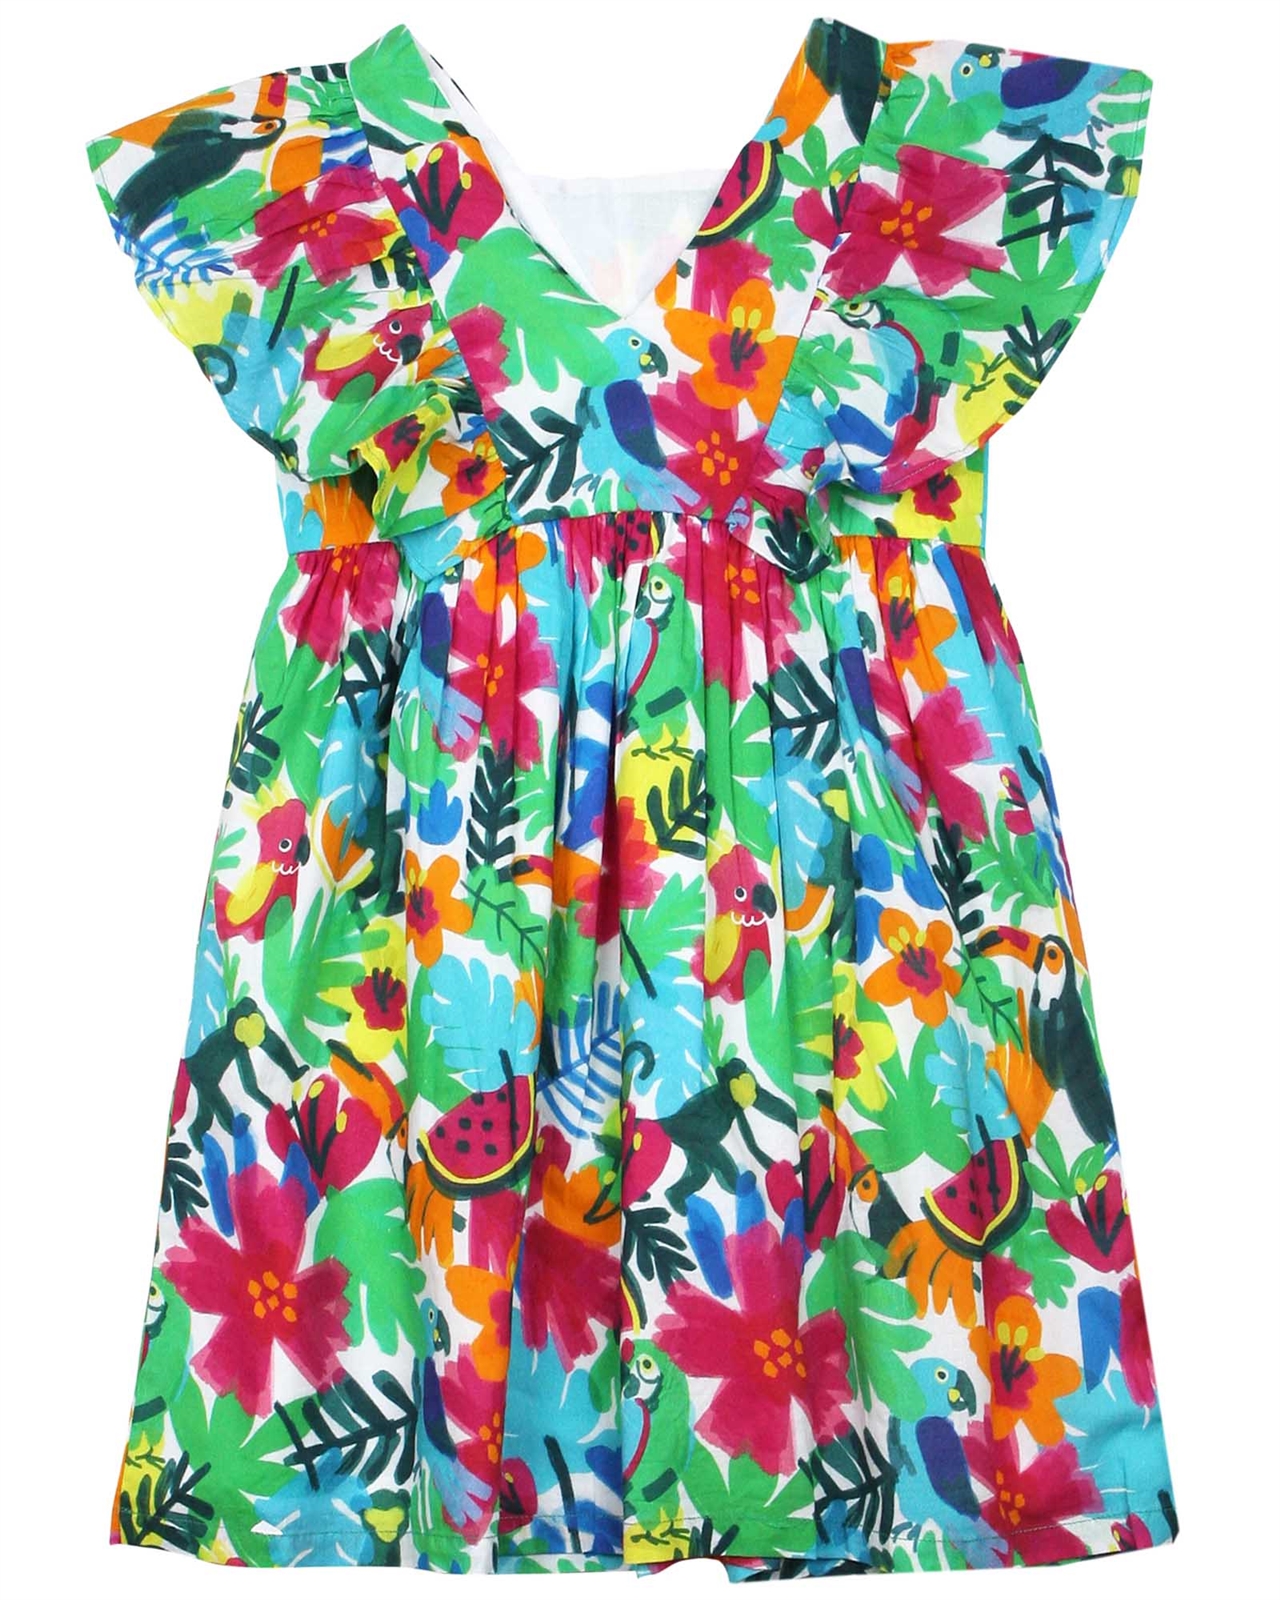 Tuc Tuc Girl's Dress in Tropical Floral Print - Tuc Tuc - Tuc Tuc ...